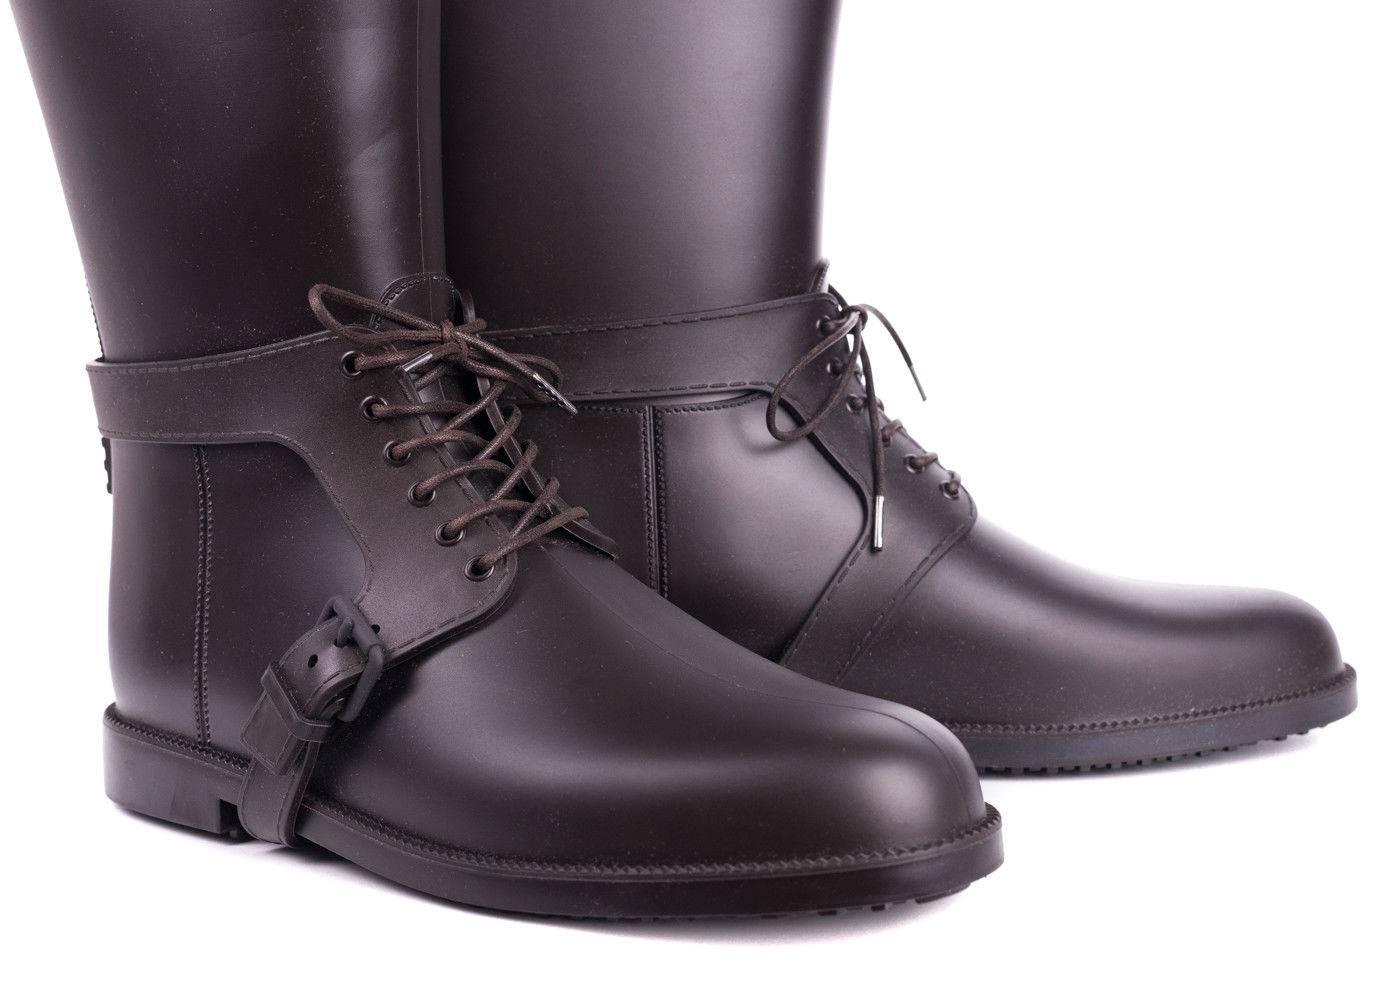 equestrian rain boots